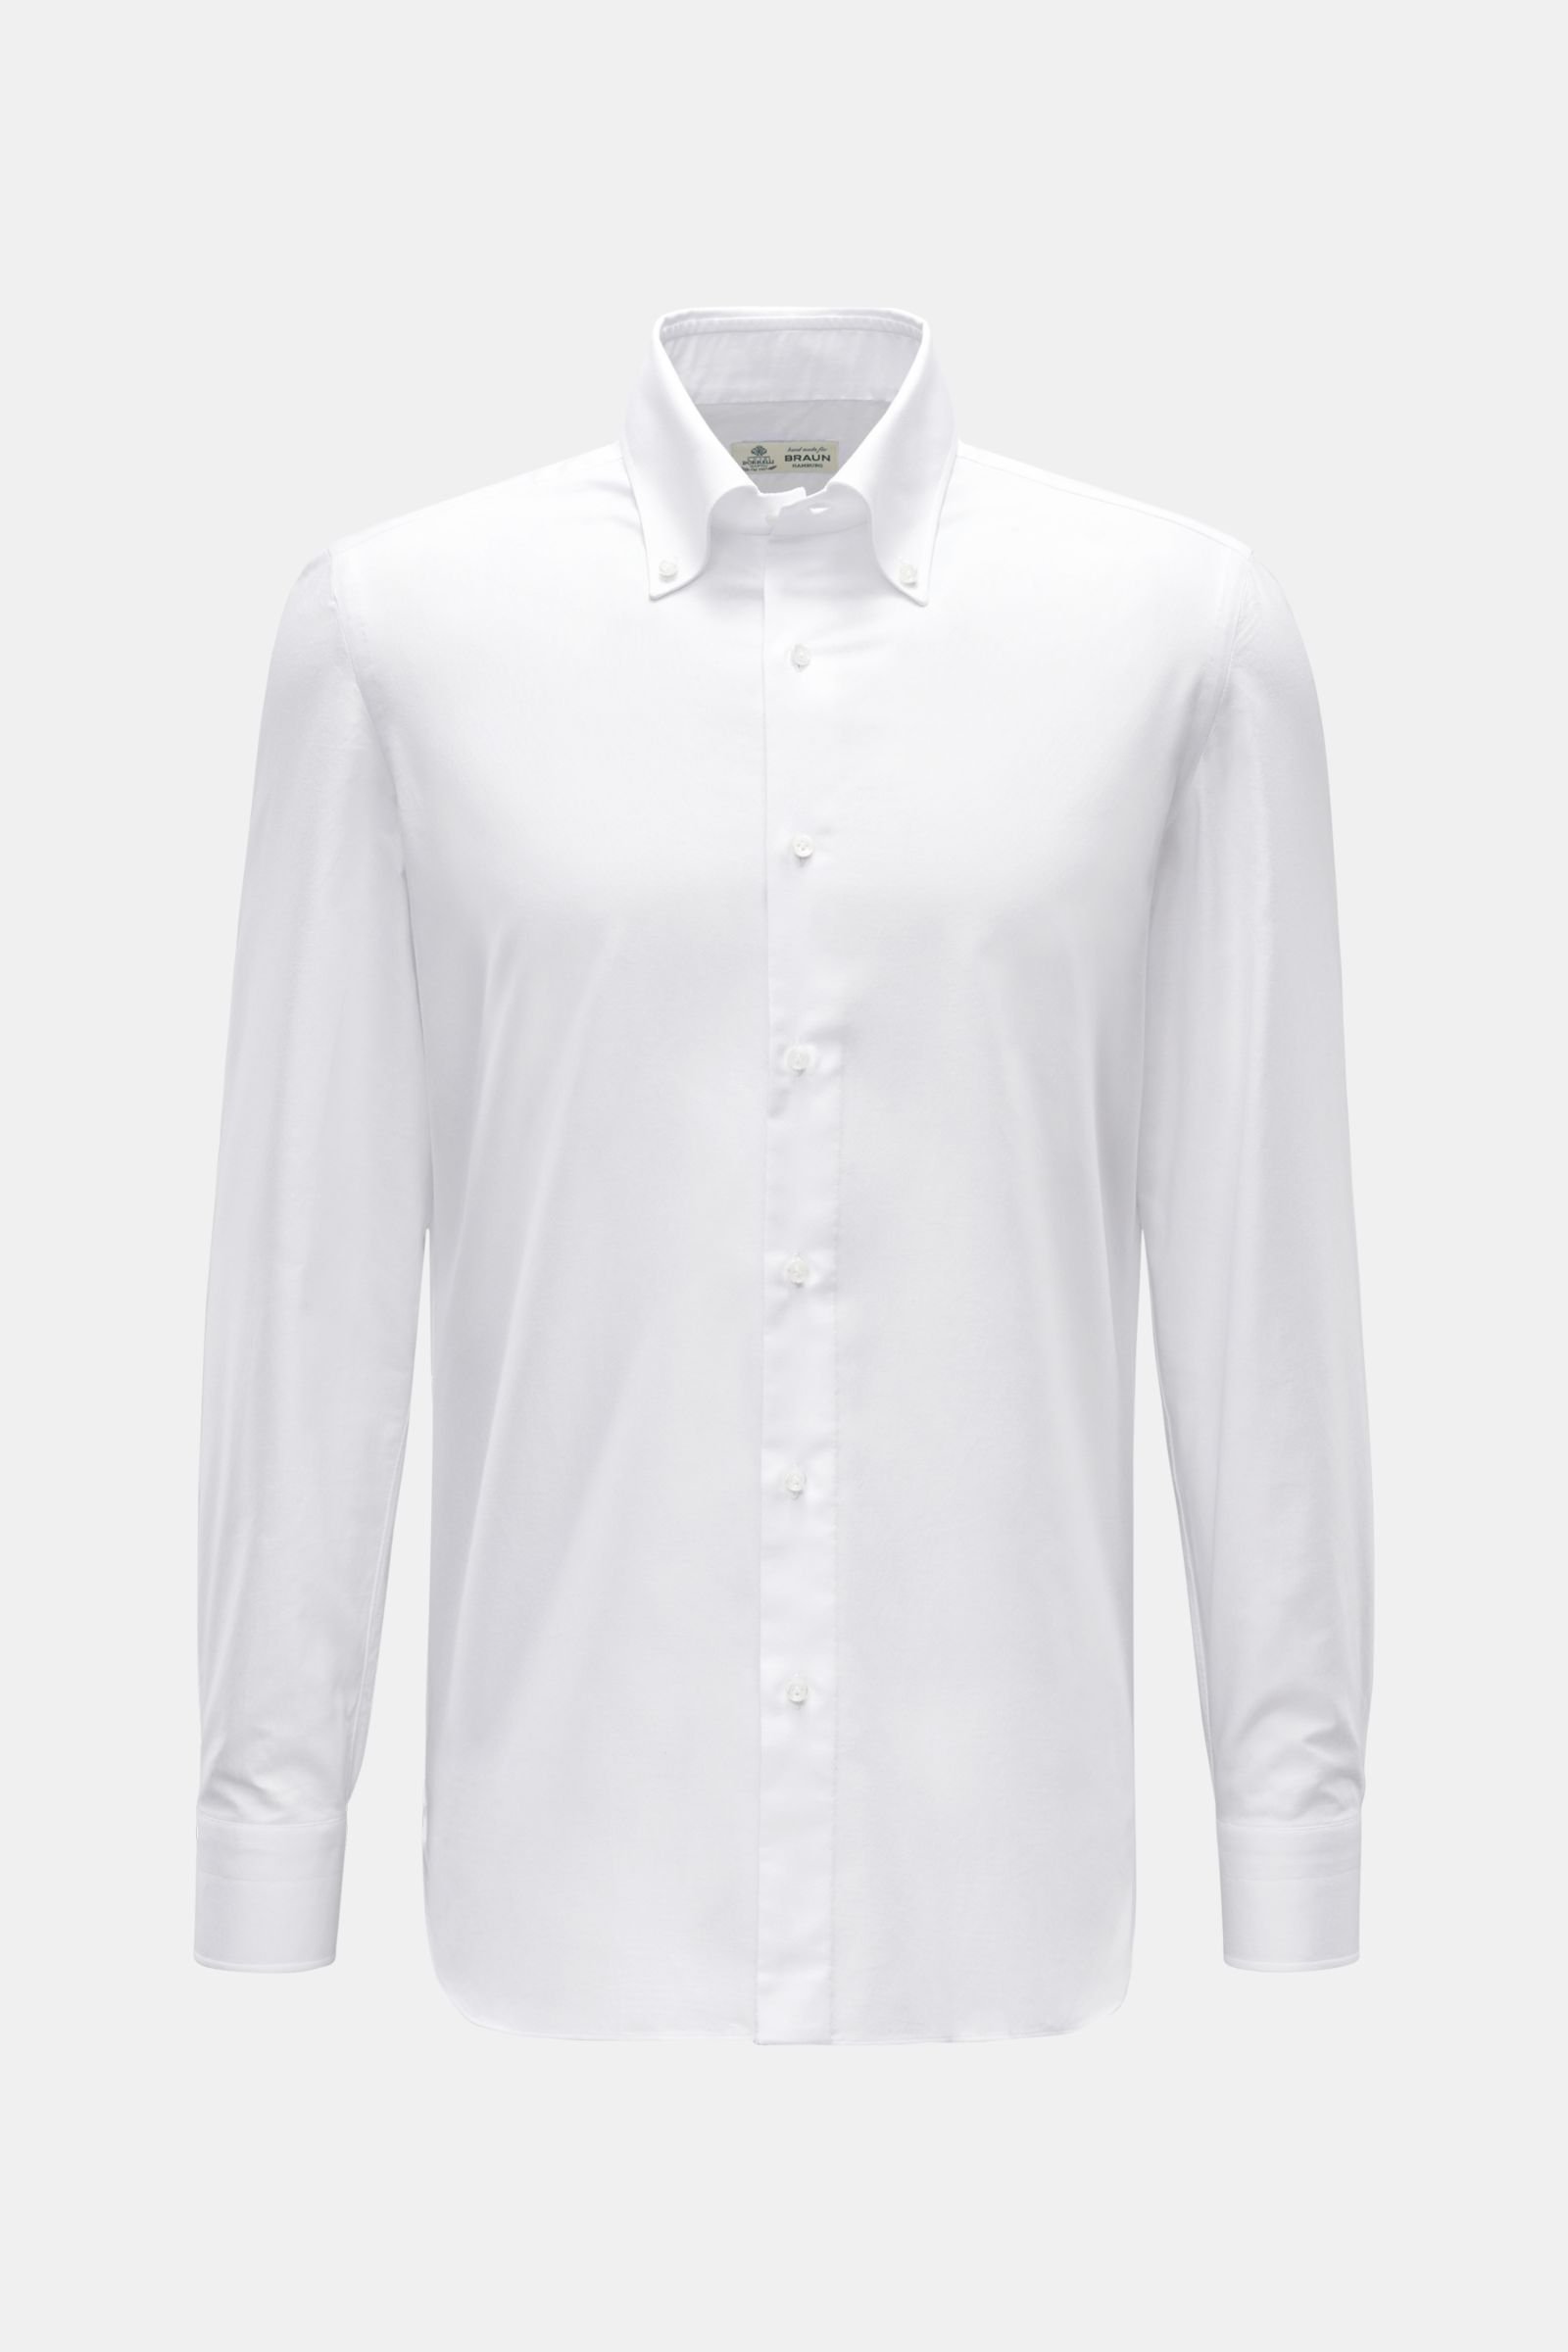 BORRELLI Oxford shirt 'Gable' button-down collar white | BRAUN Hamburg